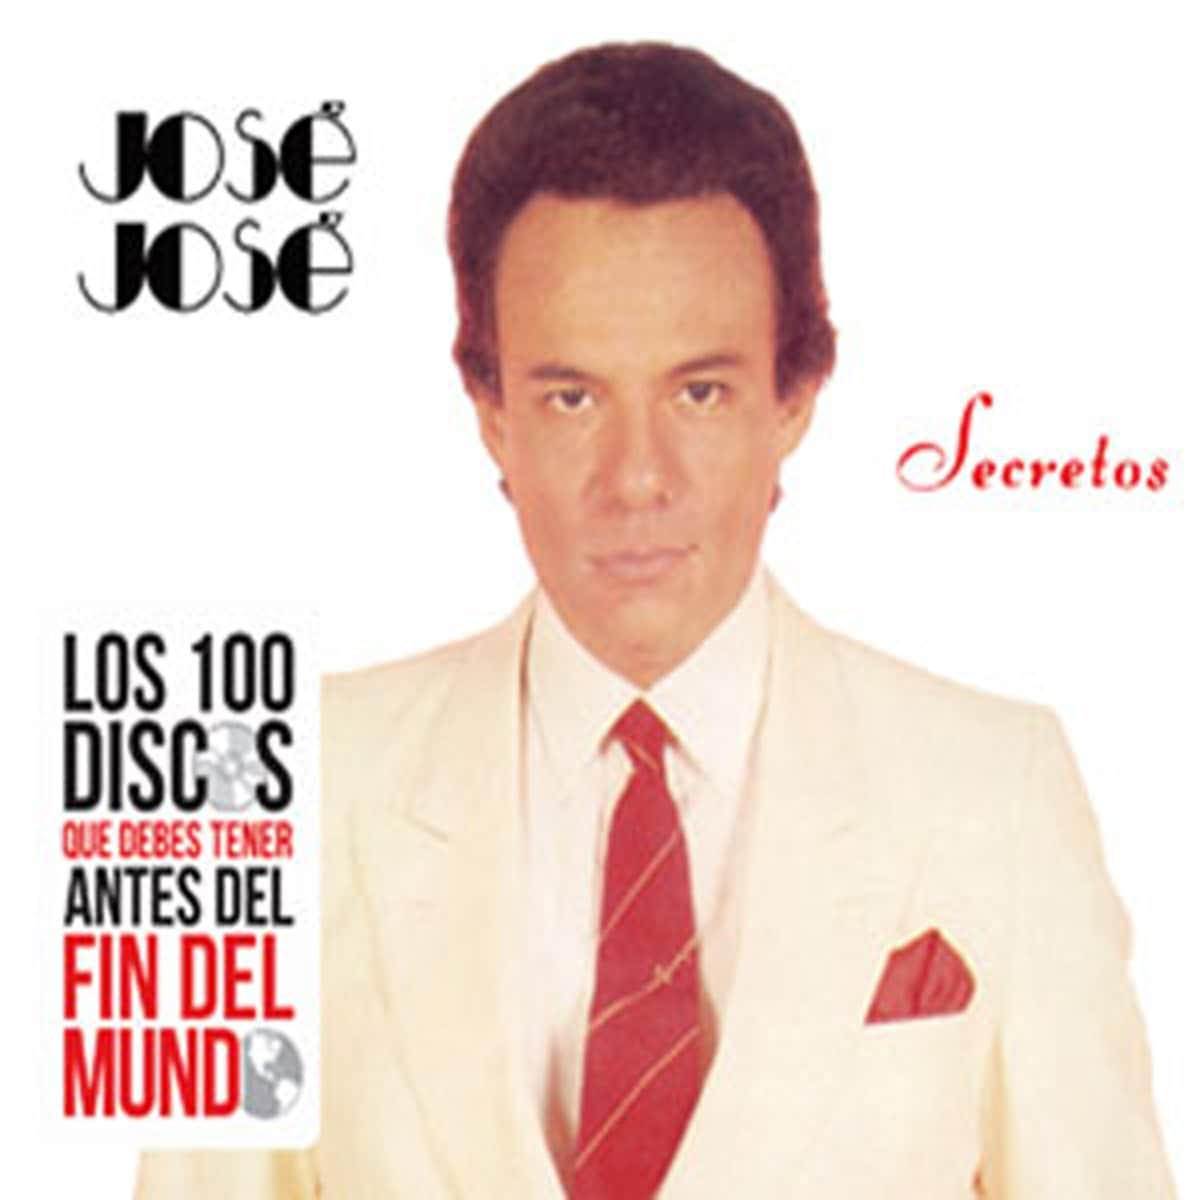 Cd José José Secretos